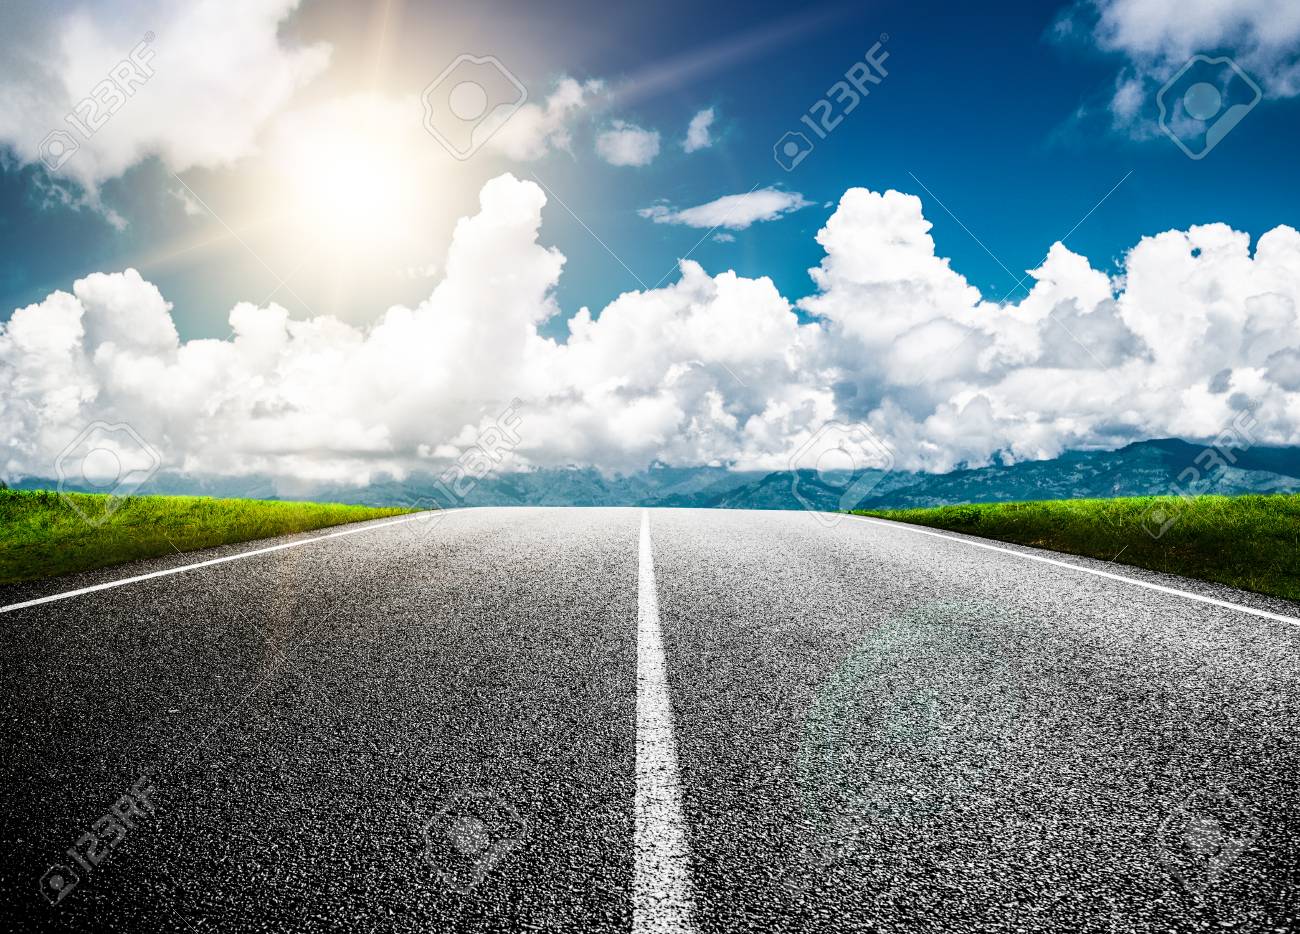 Road ahead into the future